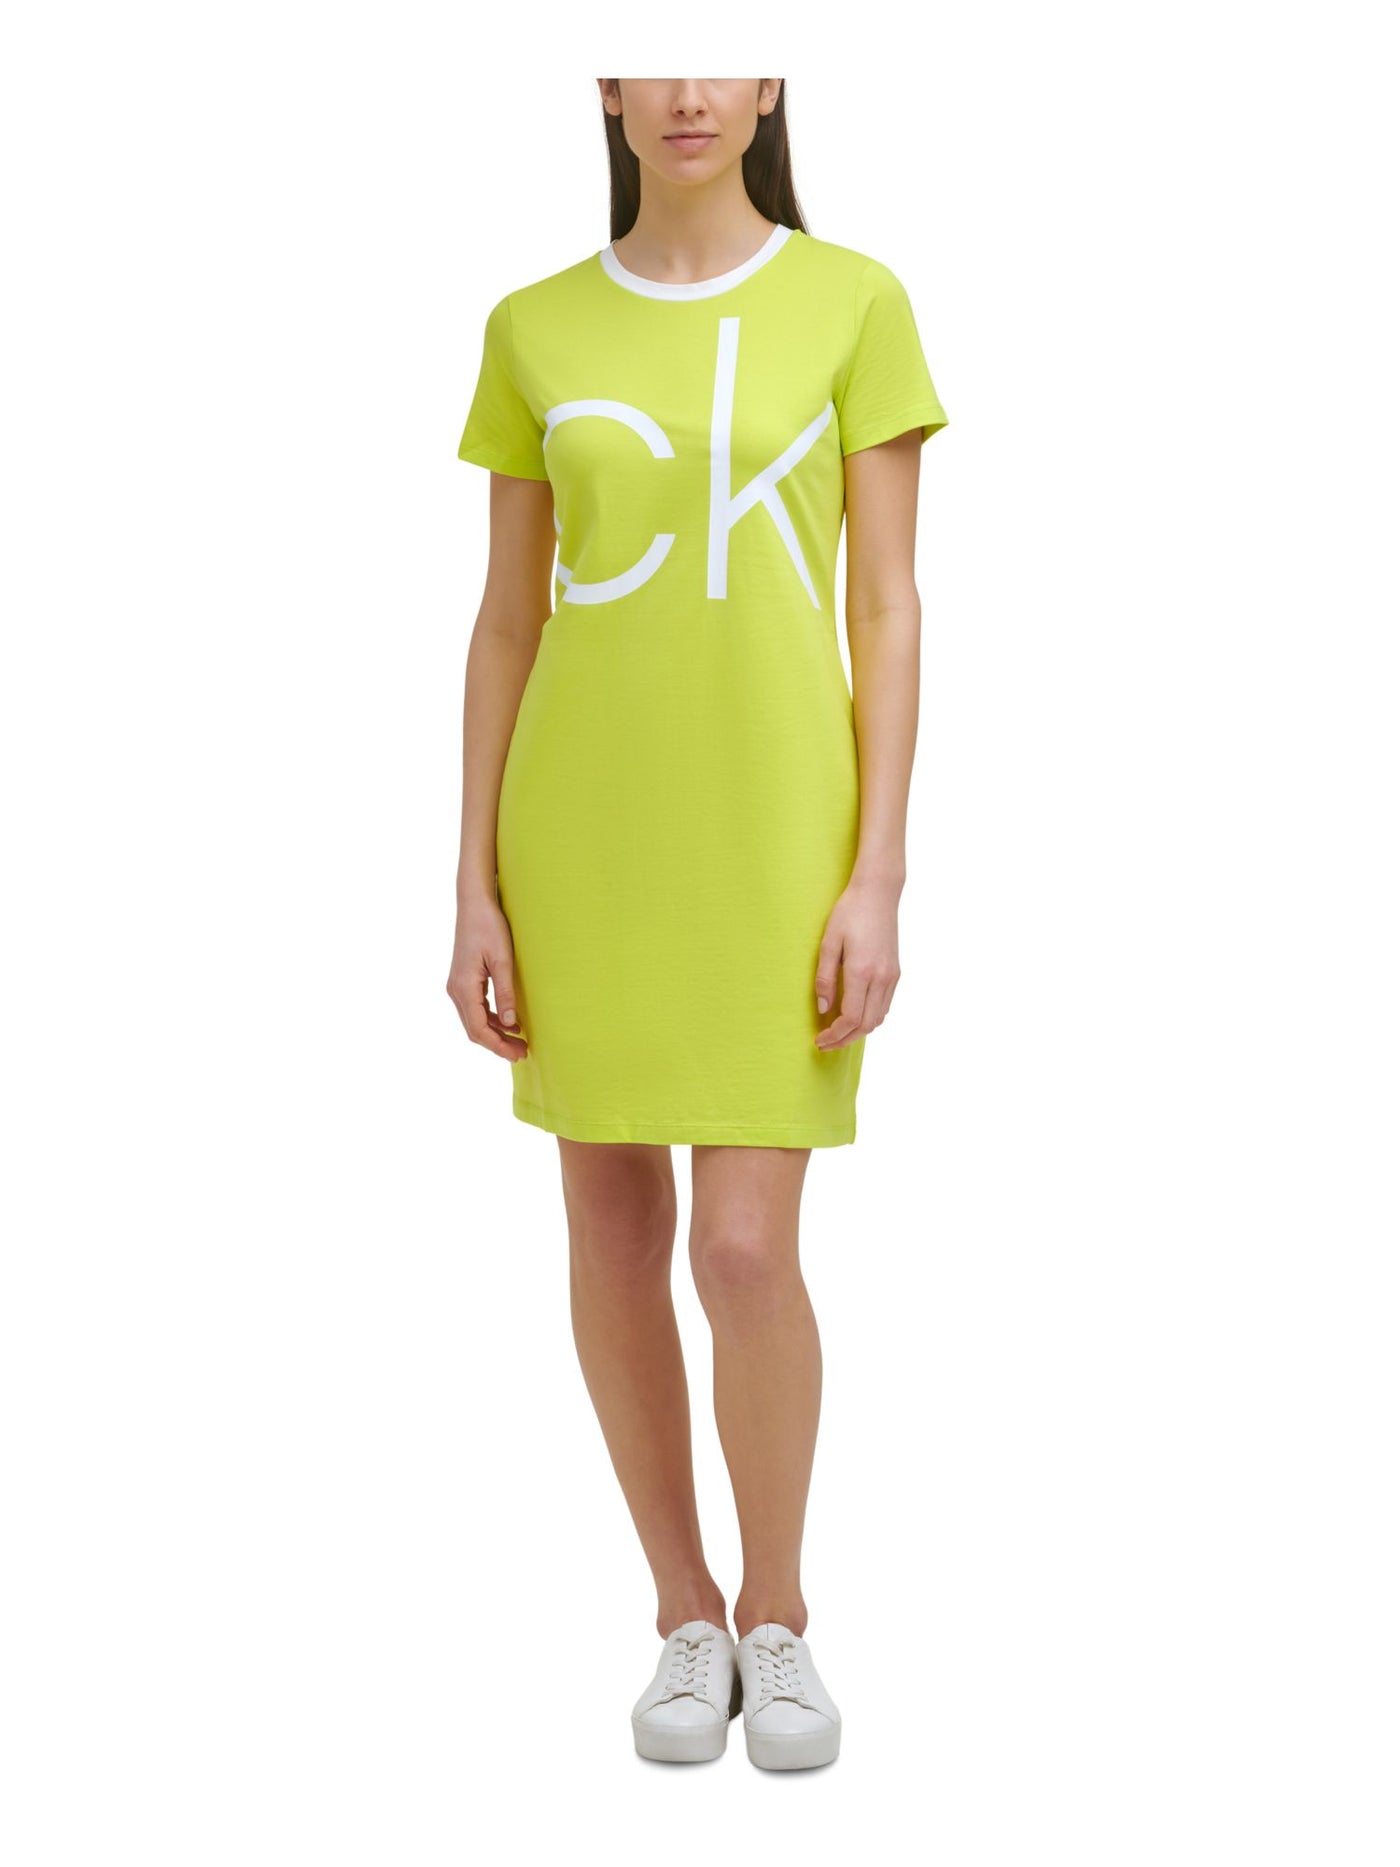 CALVIN KLEIN Womens Green Stretch Logo Graphic Short Sleeve Crew Neck Above The Knee T-Shirt Dress S